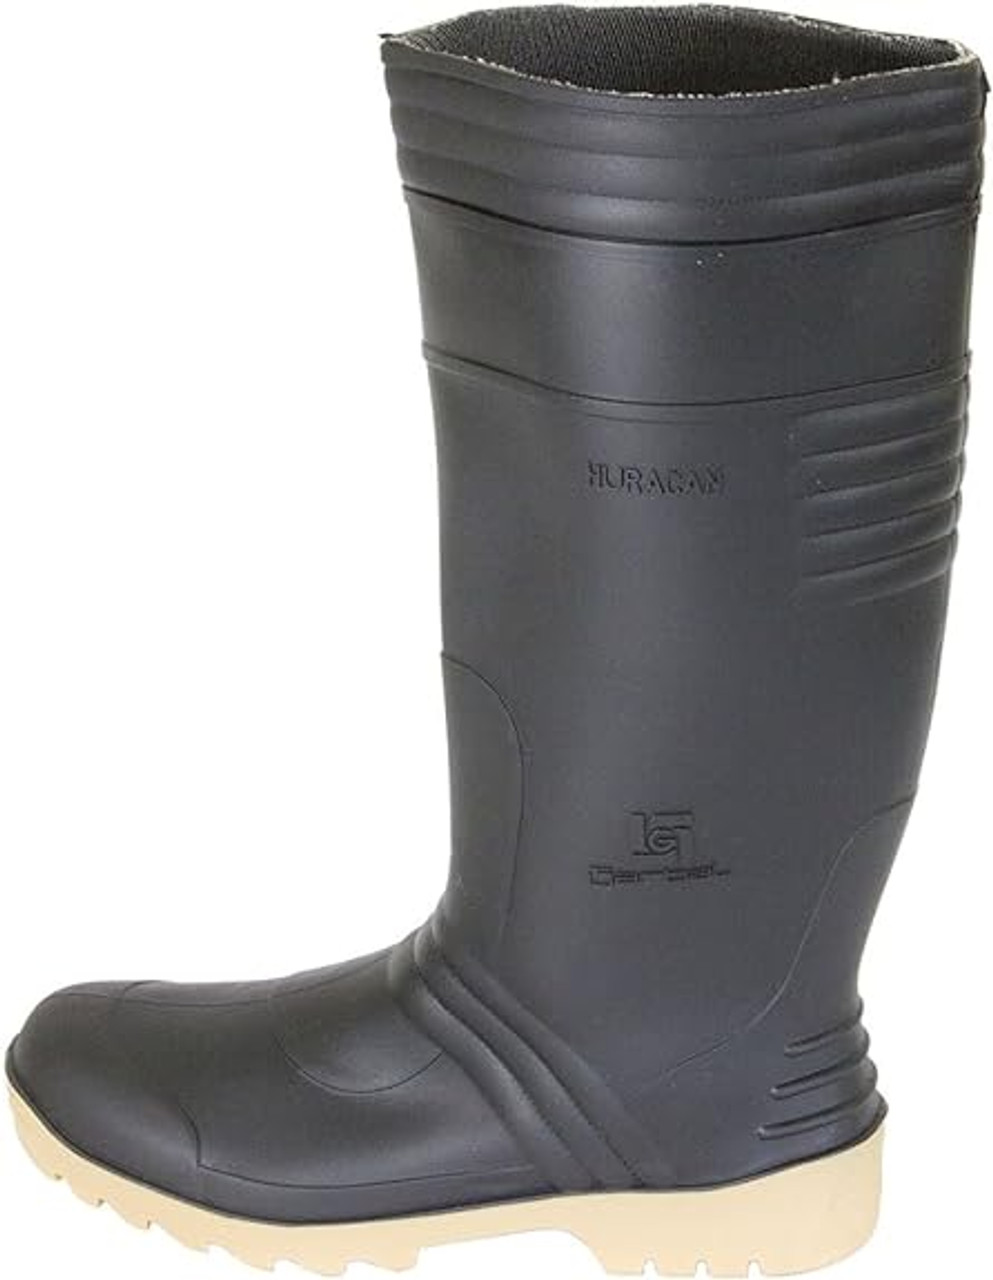 Garbal Huracan Boots 50977, 16", Black, PVC, Size 6.5